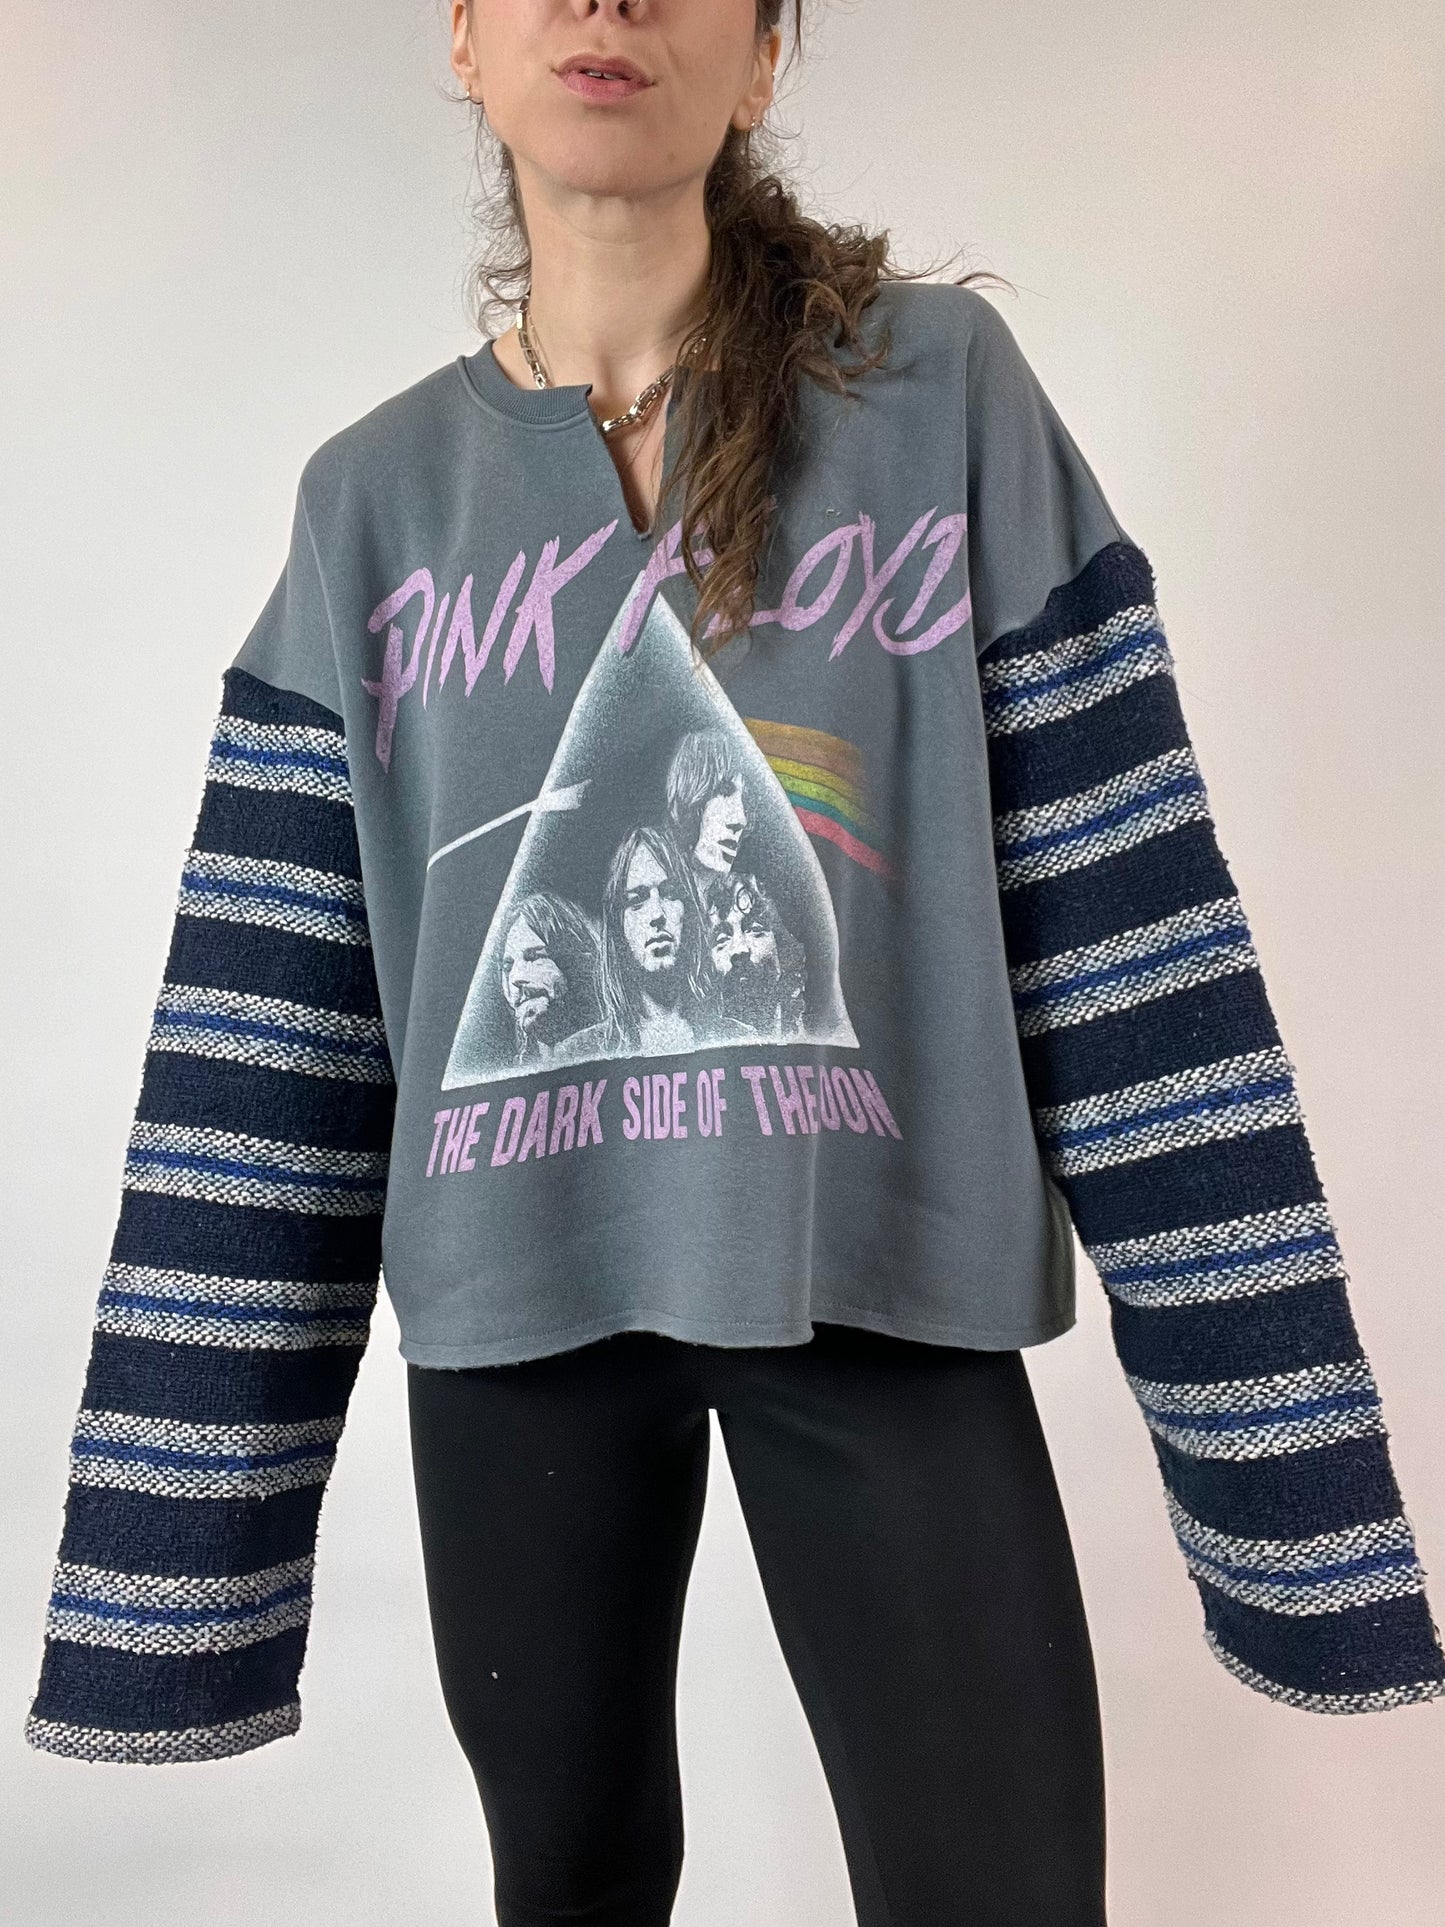 The Pink Floyd Baja Sweatshirt - L-2XL